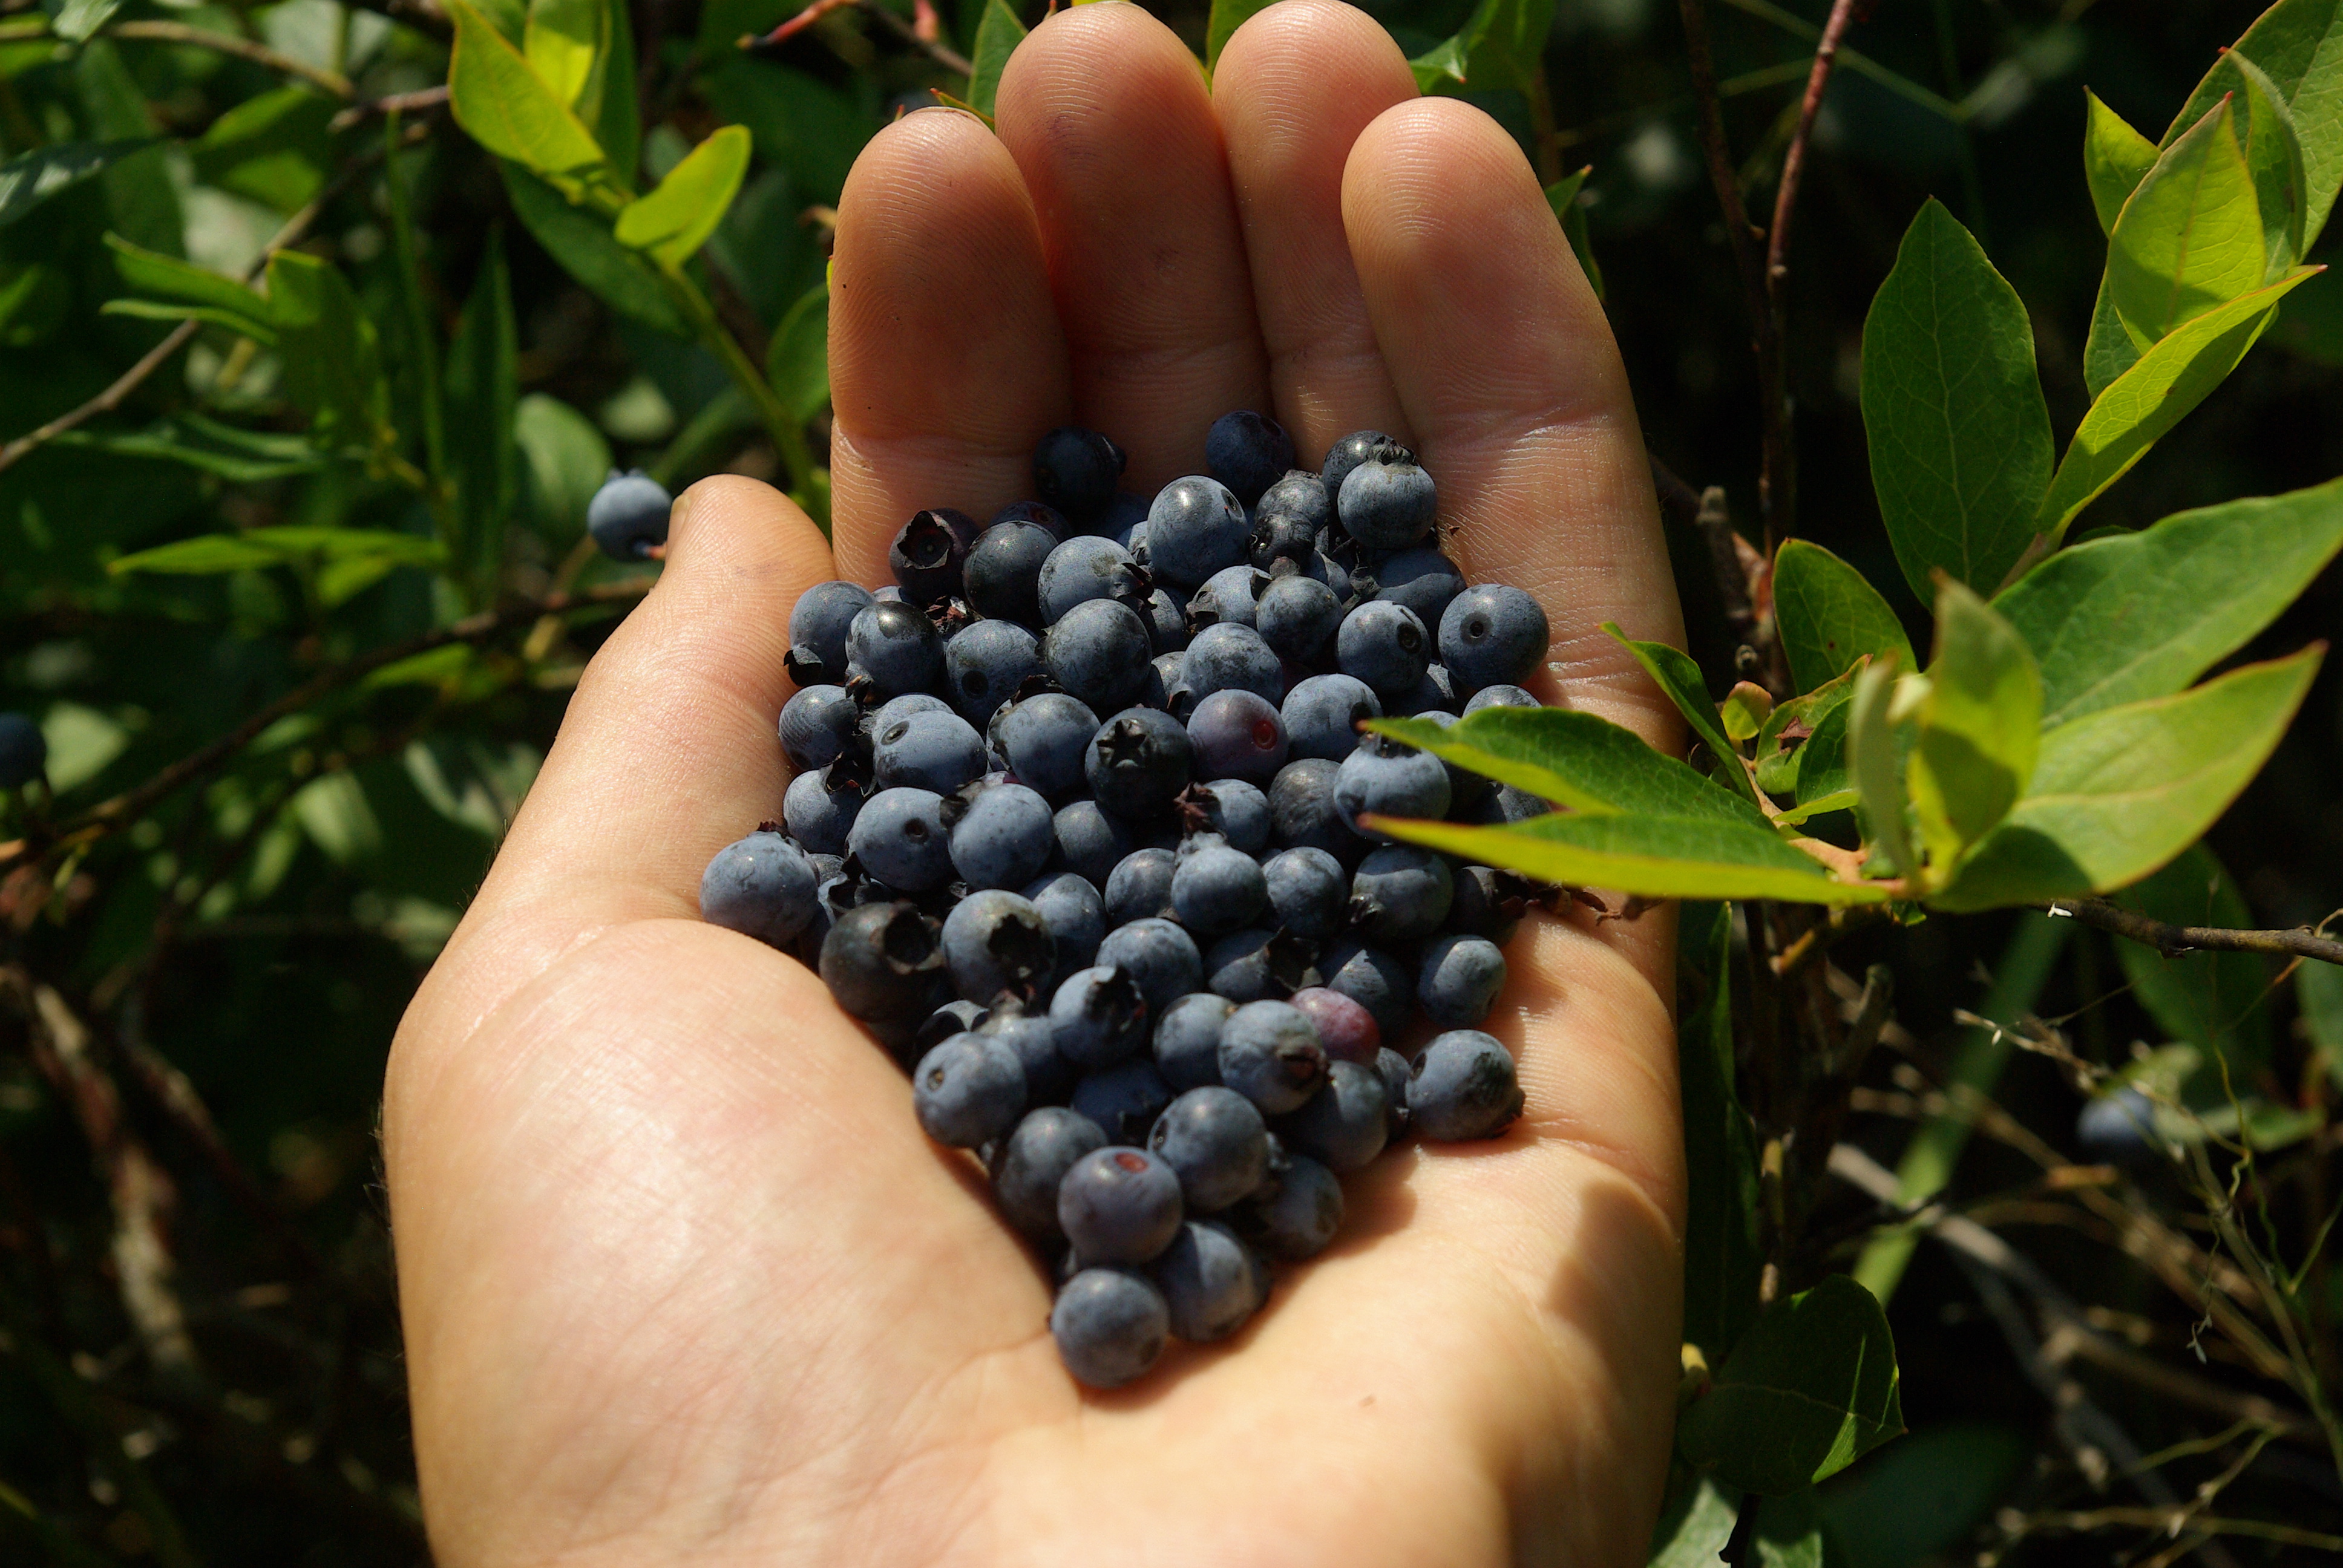 Wild blueberries photo